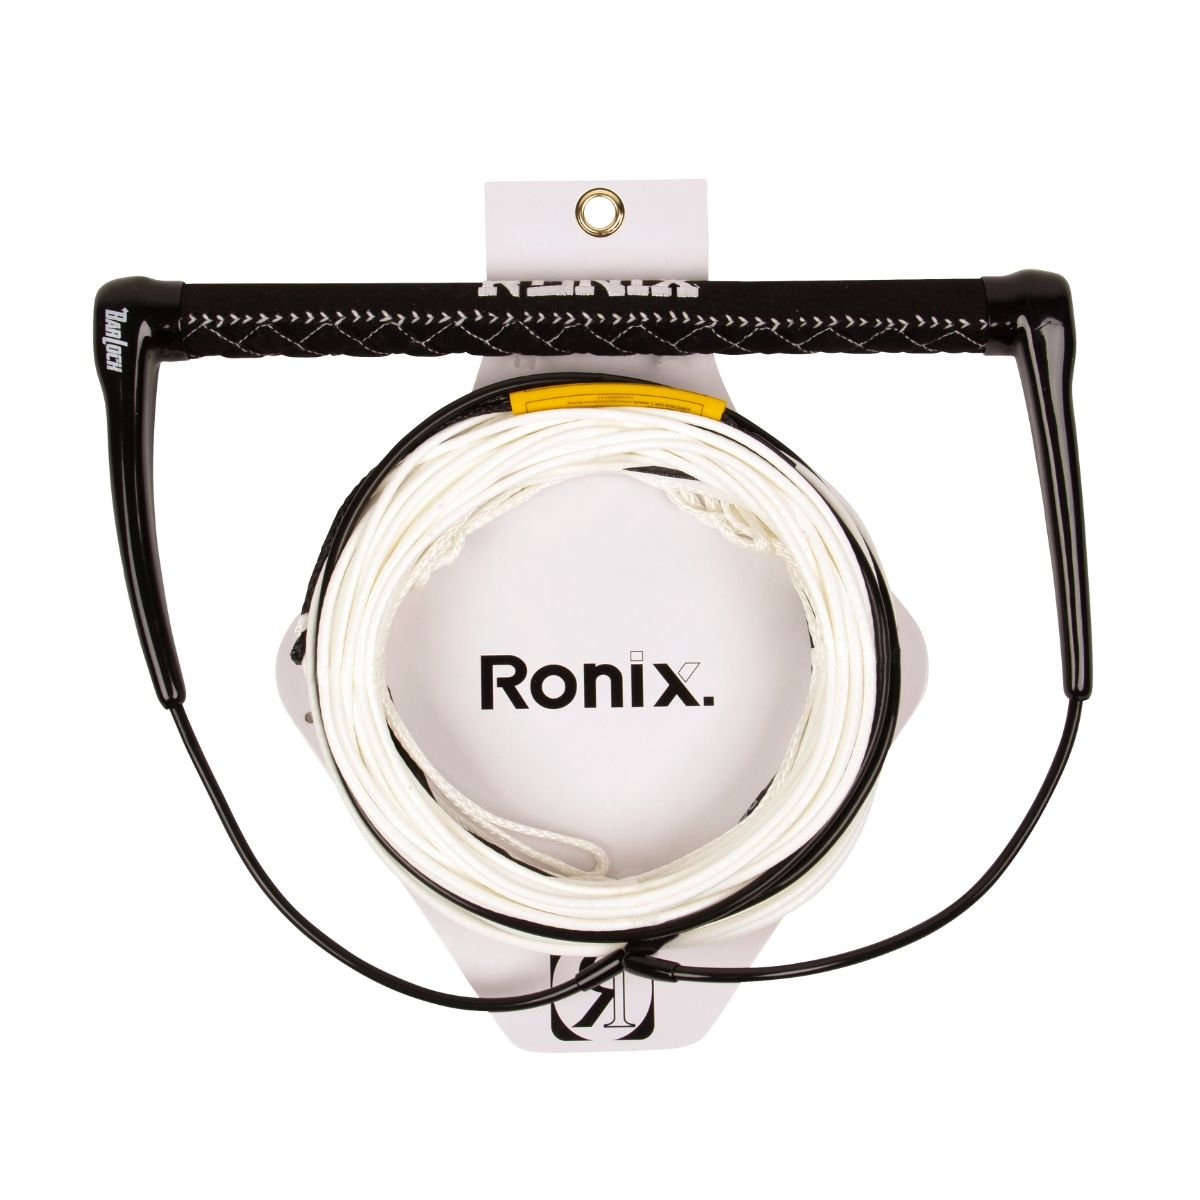 Ronix Combo 5.0 Hide Grip w/ 80ft. R6 Rope - BoardCo